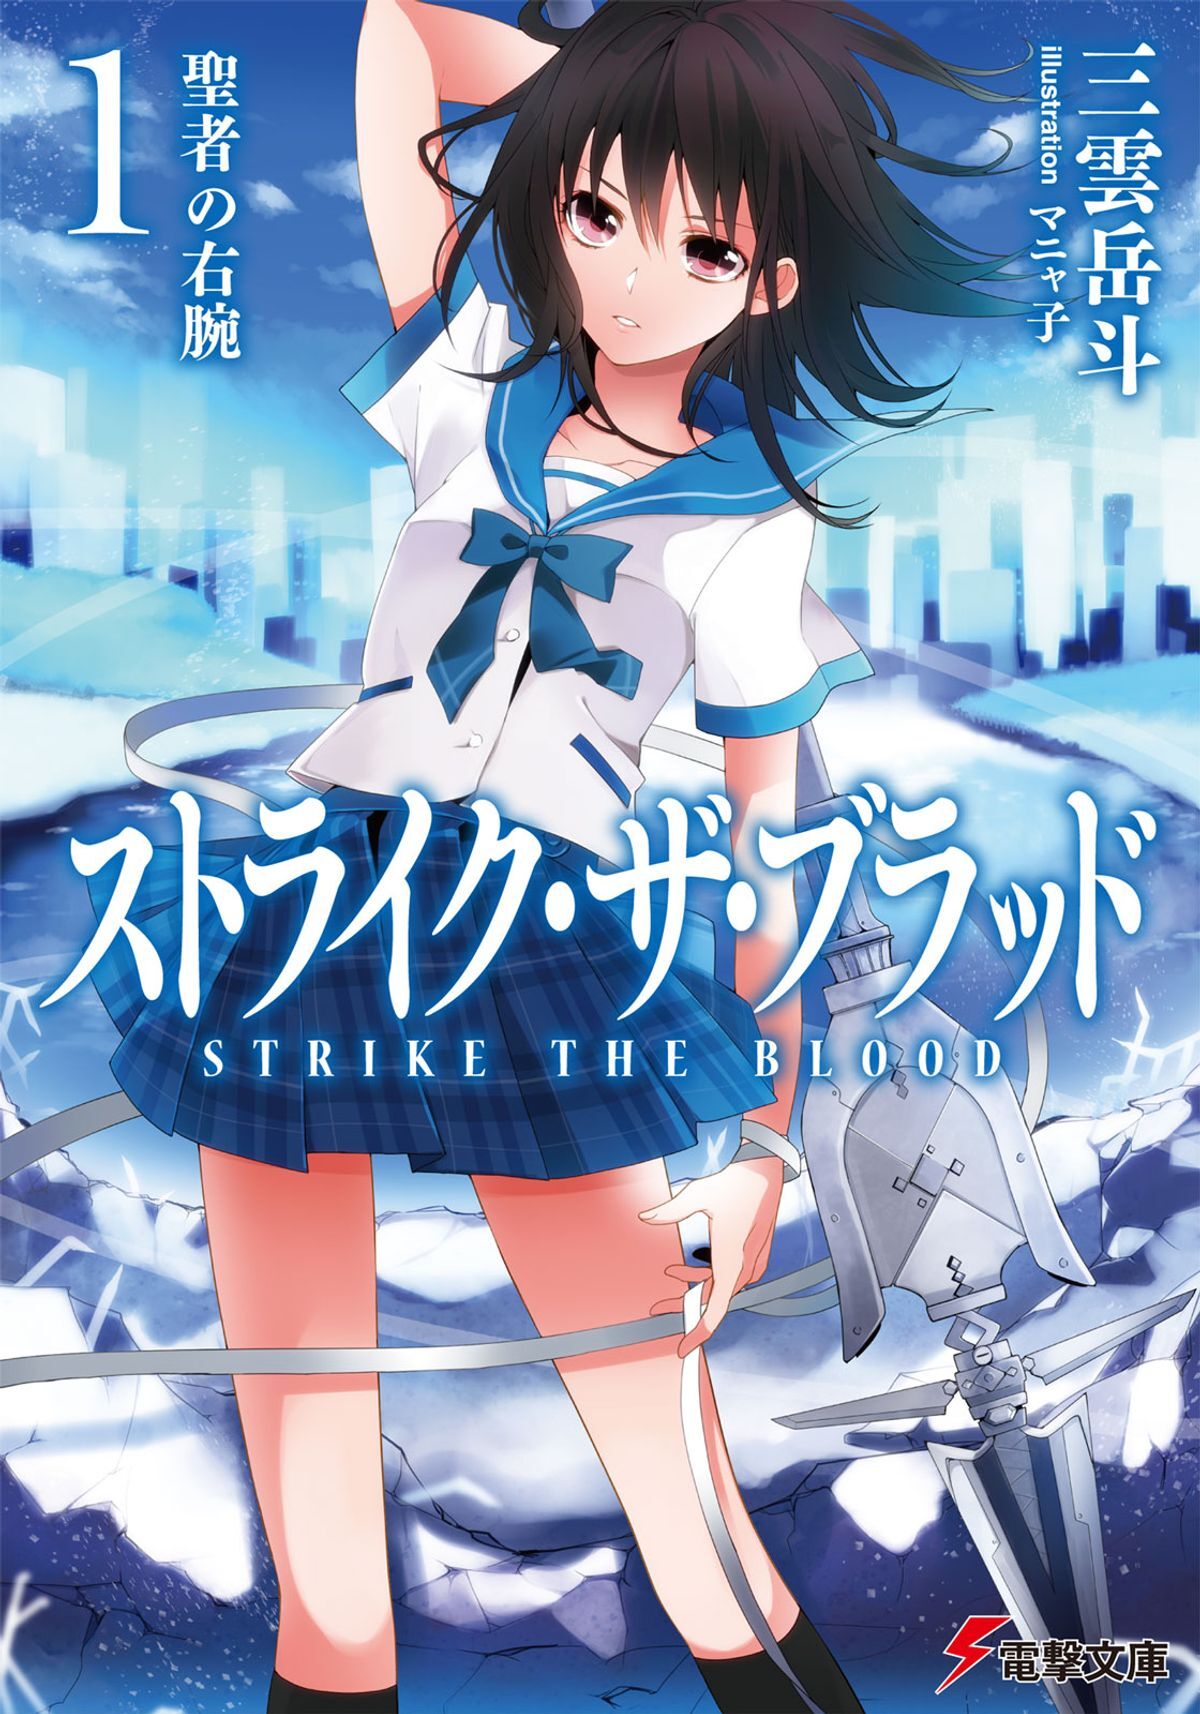 Light Novel Volume 12, Strike The Blood Wiki, Fandom